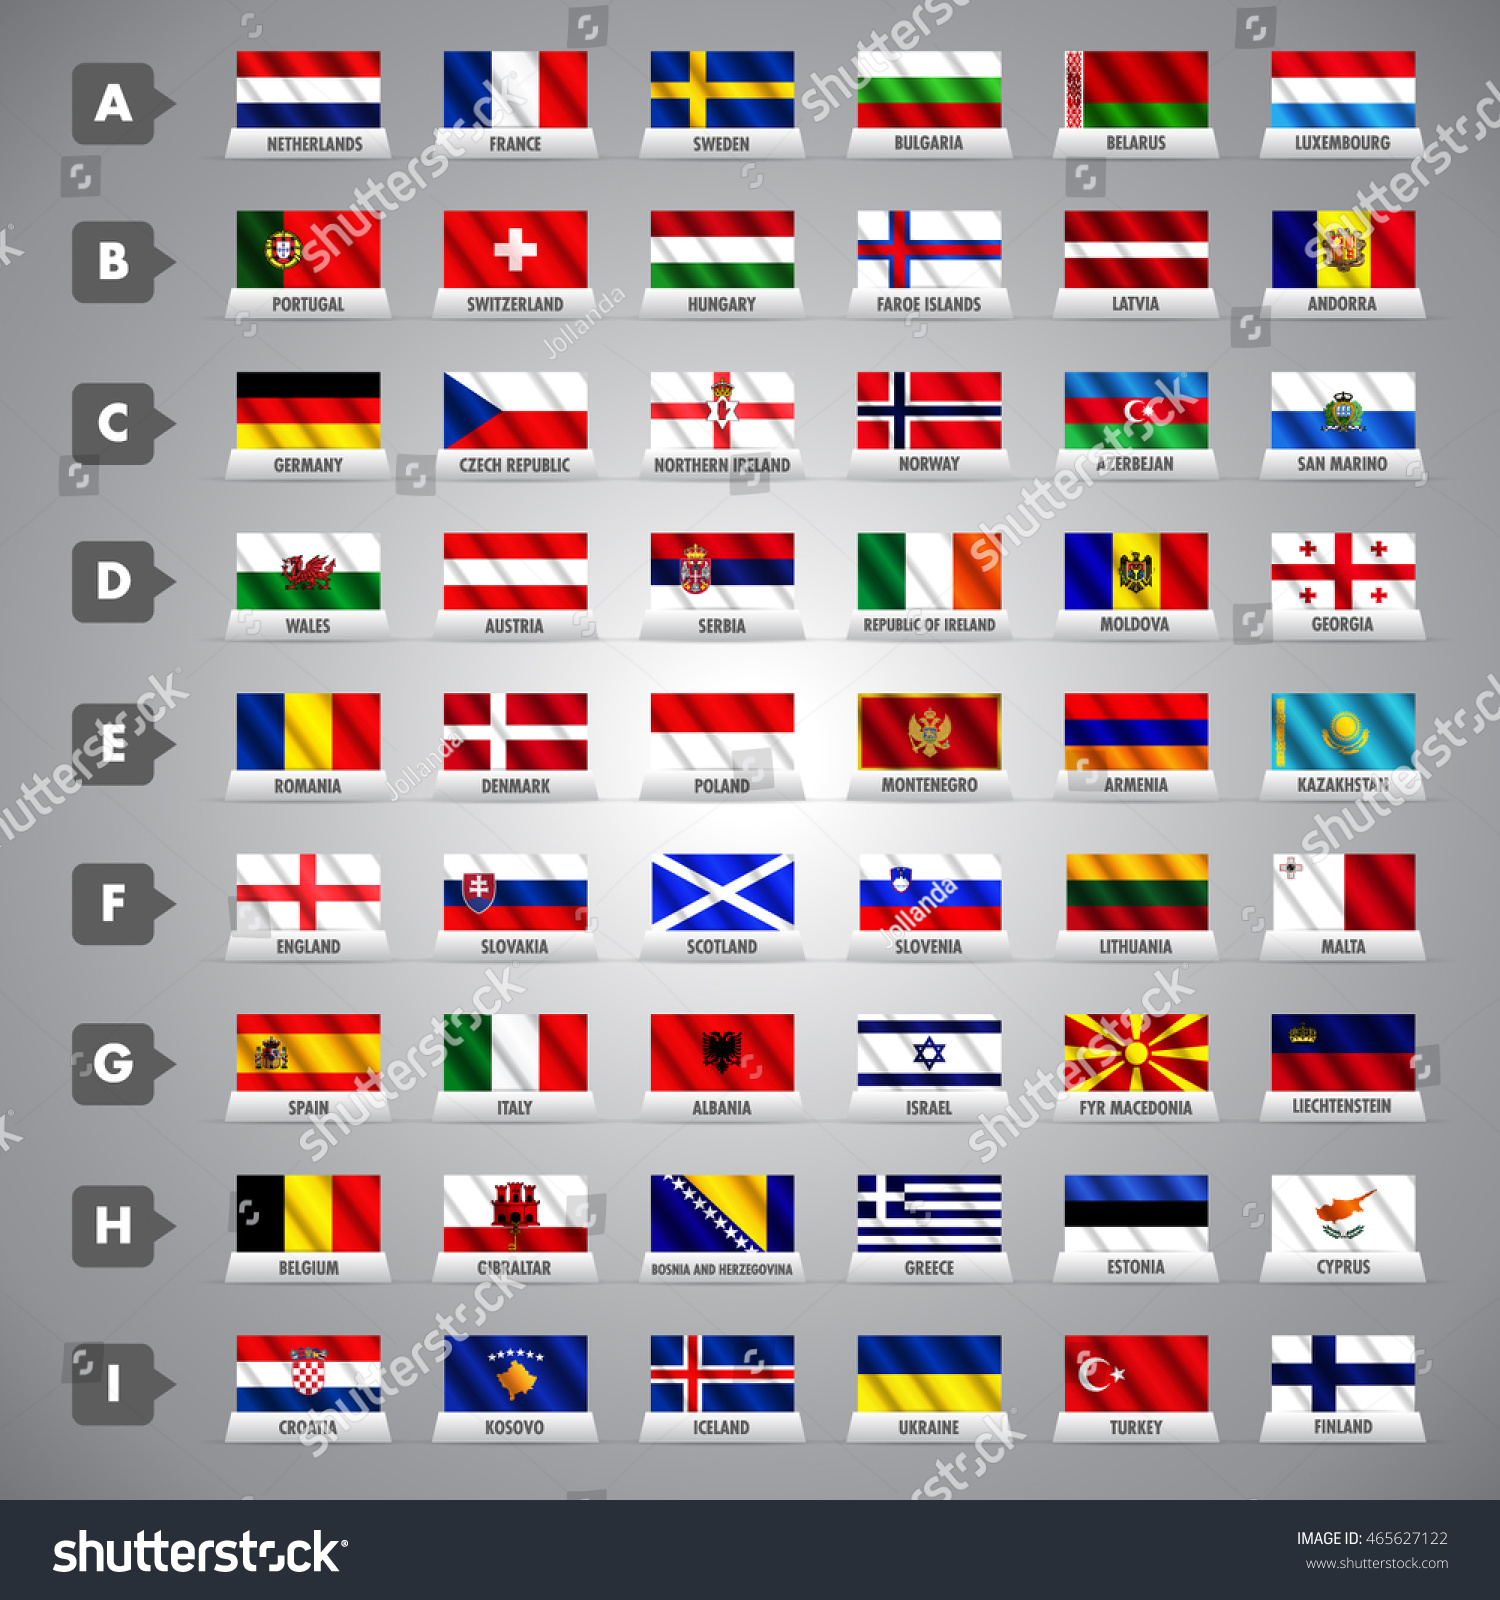 Russia 2018 World Cup European Qualification Groups European Countries Vector Waving Flags 8721